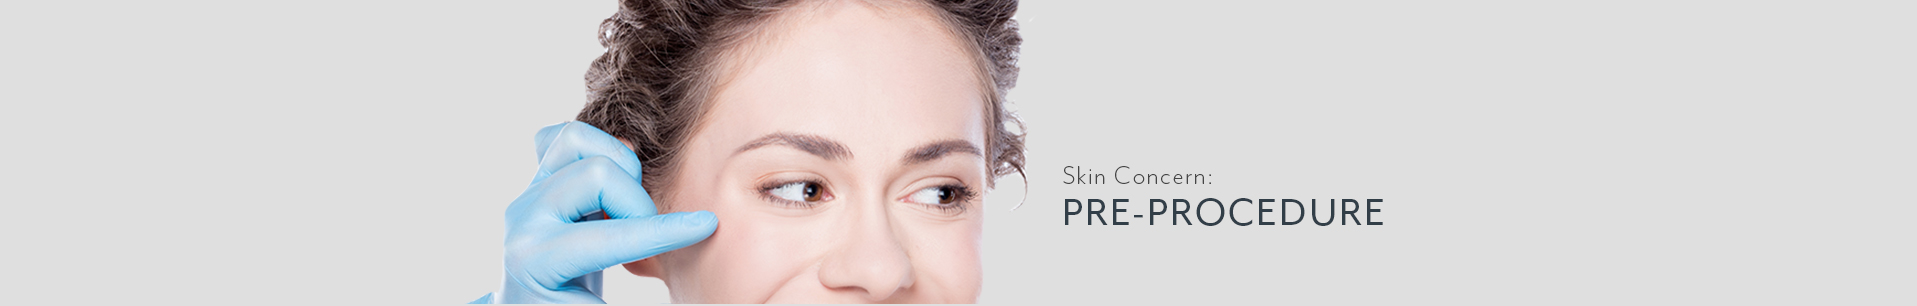 Skincare concern pre-procedure